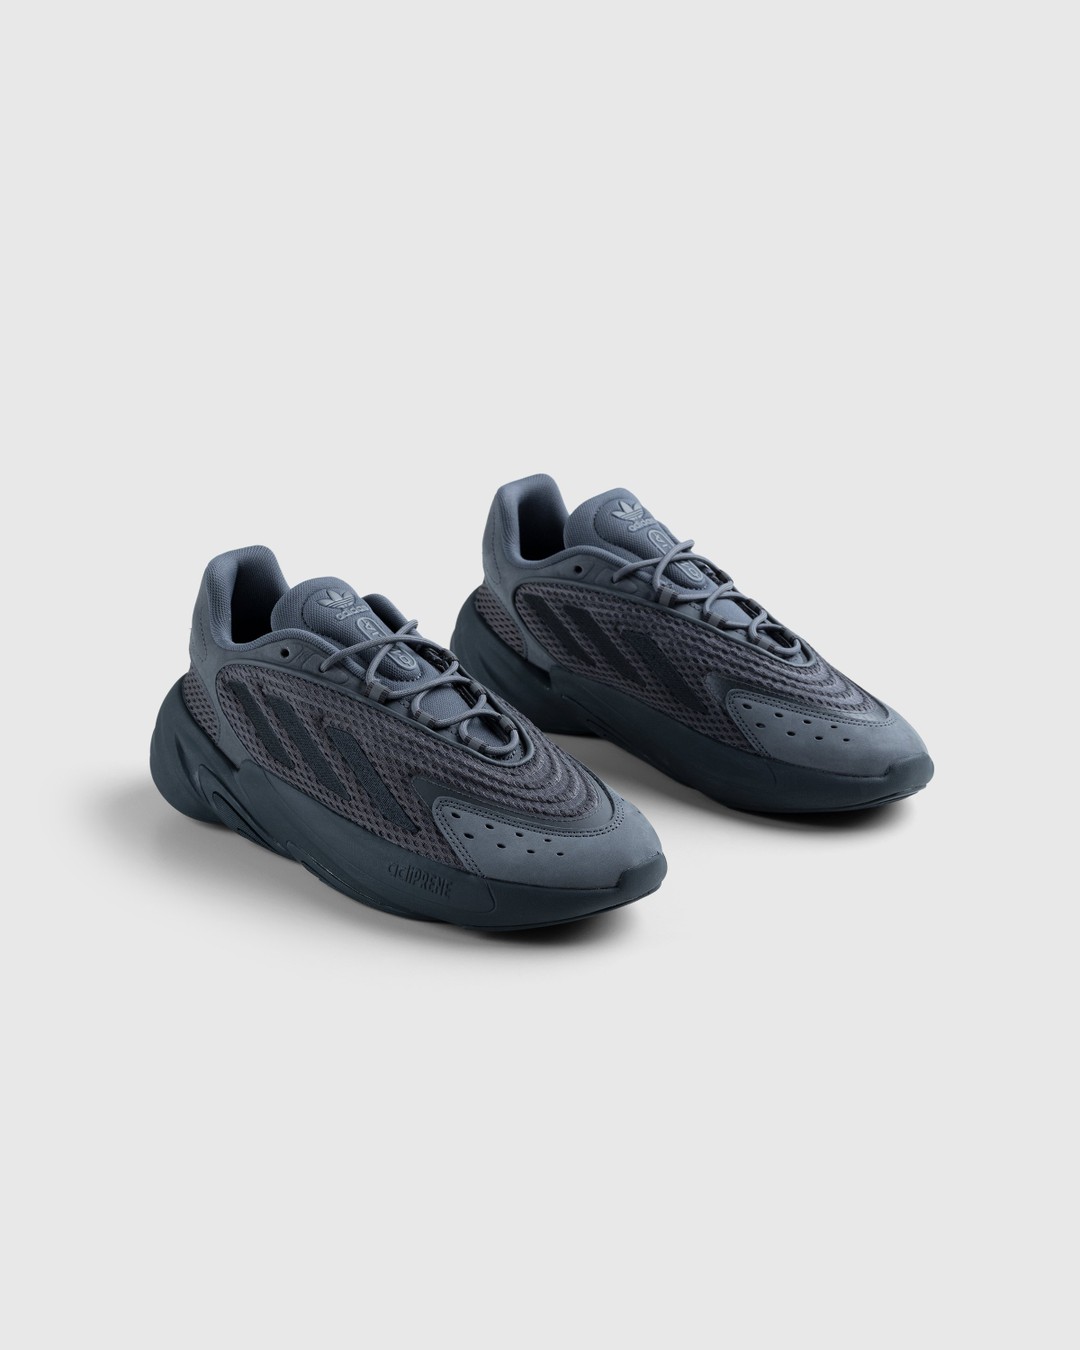 Adidas – Ozelia Grey/Carbon - Low Top Sneakers - Black - Image 3